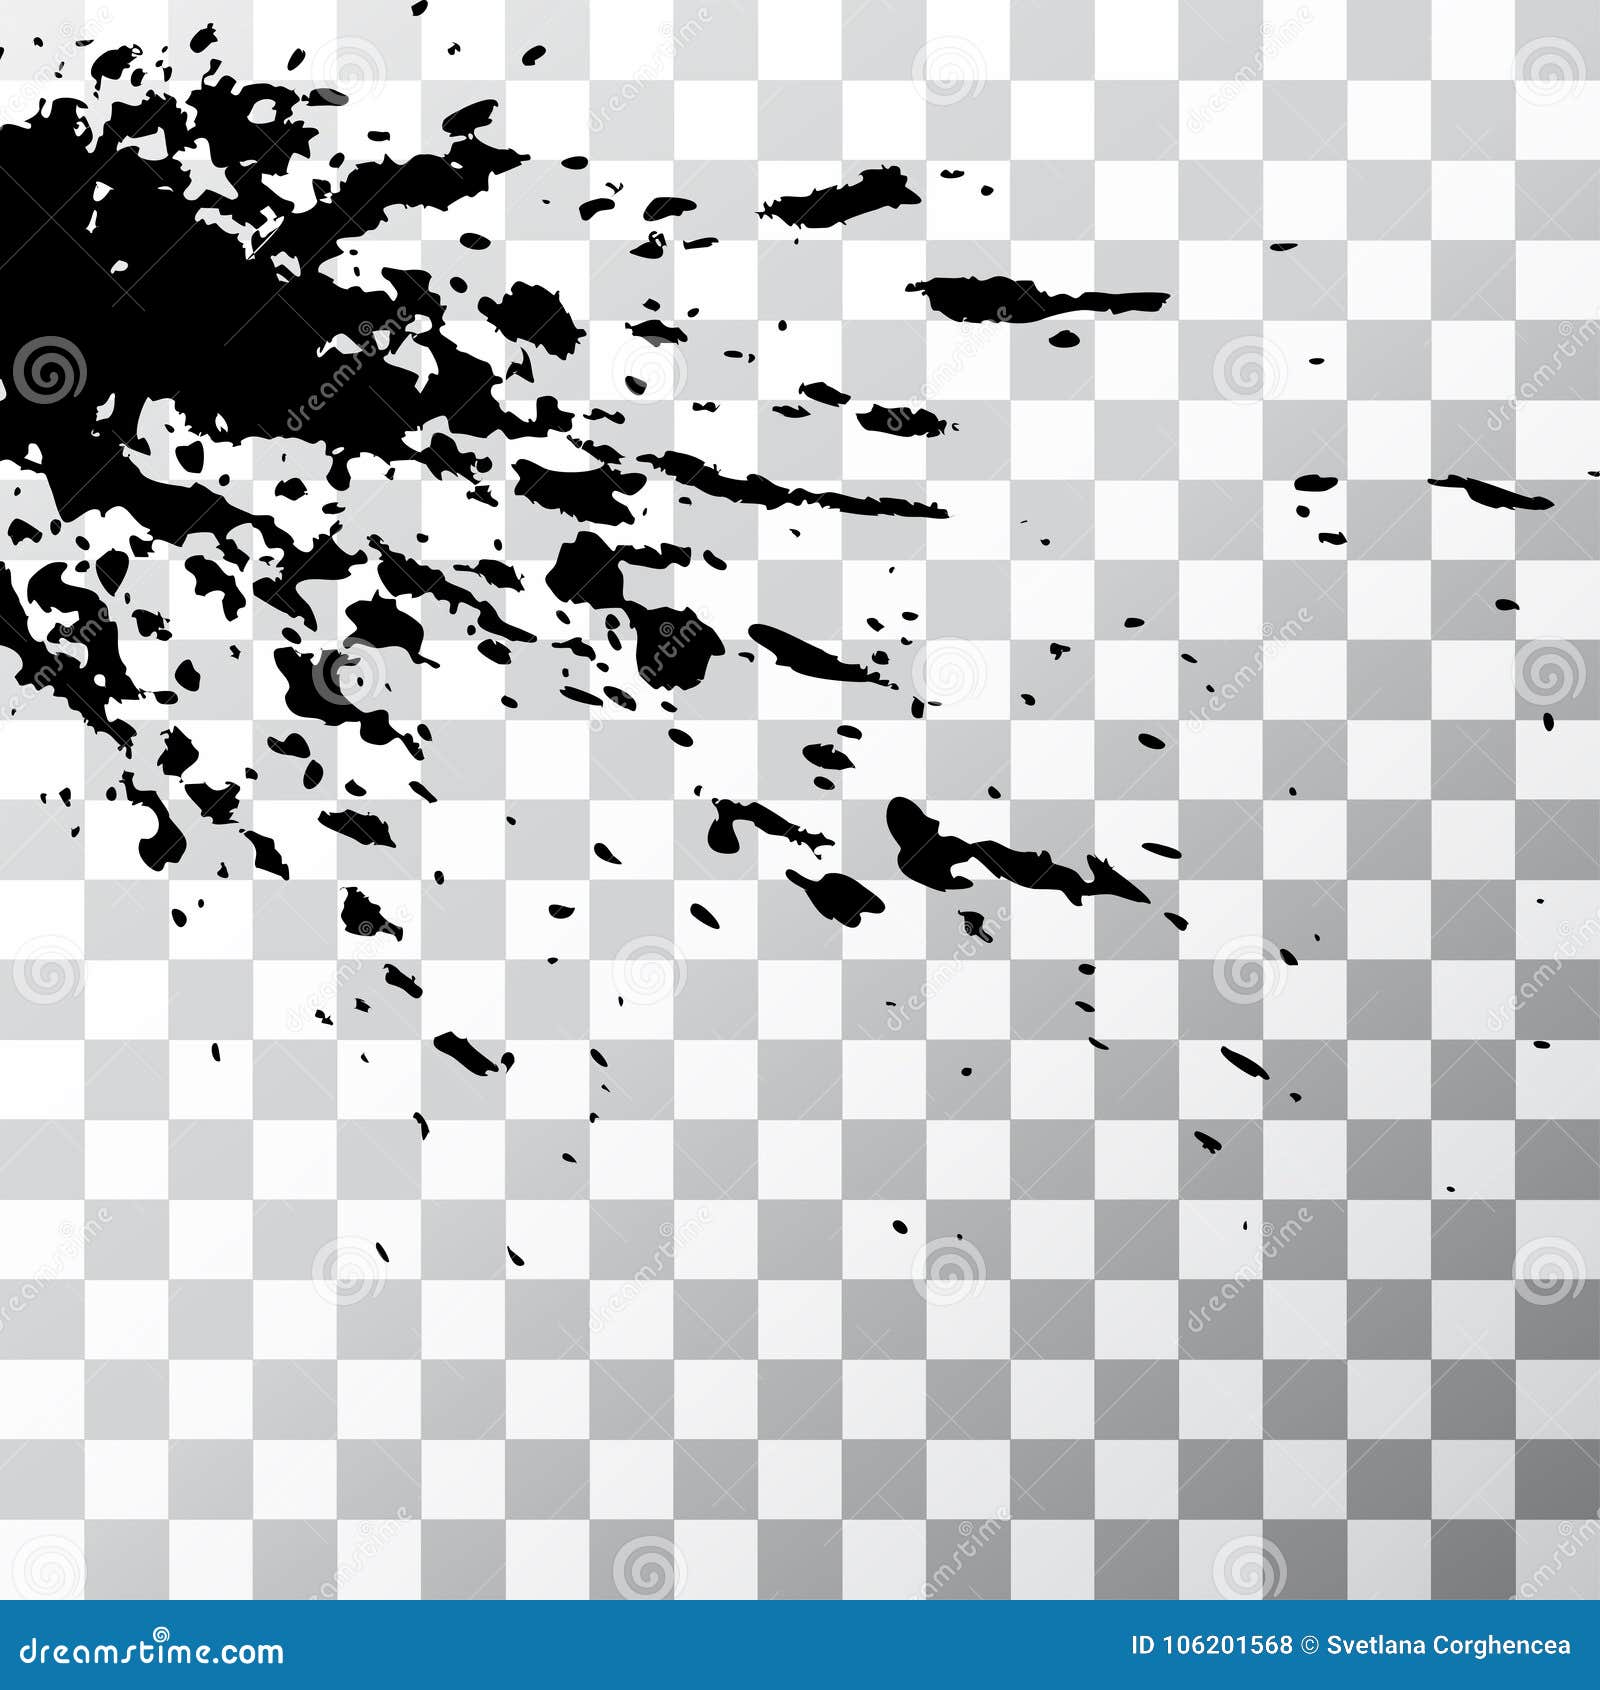 Black Ink Paint Explosion Splatter Artistic Cover Design Sketch Stock Vector Illustration Of Abstract Hipster